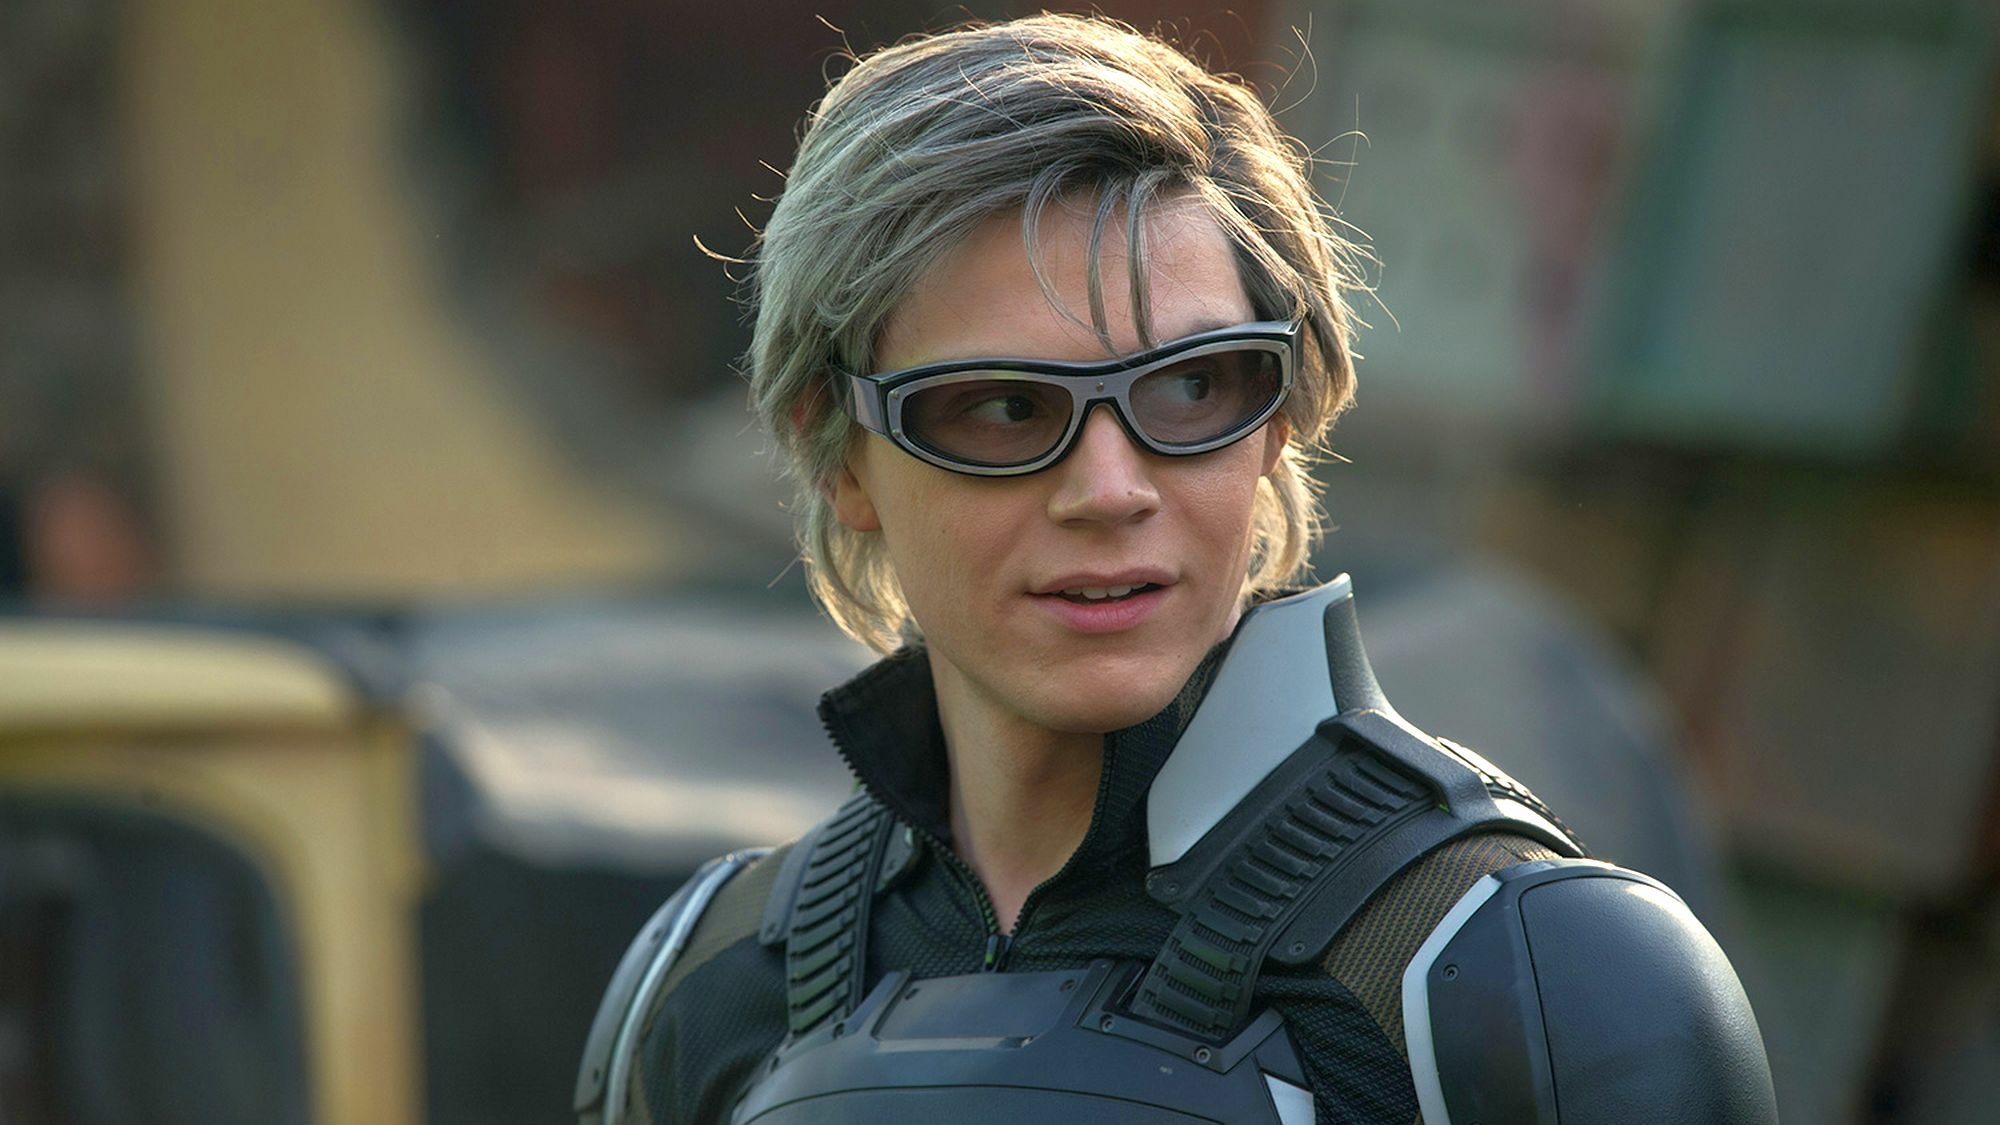 Evan Peters' Blue Hair in X-Men: Apocalypse - wide 6